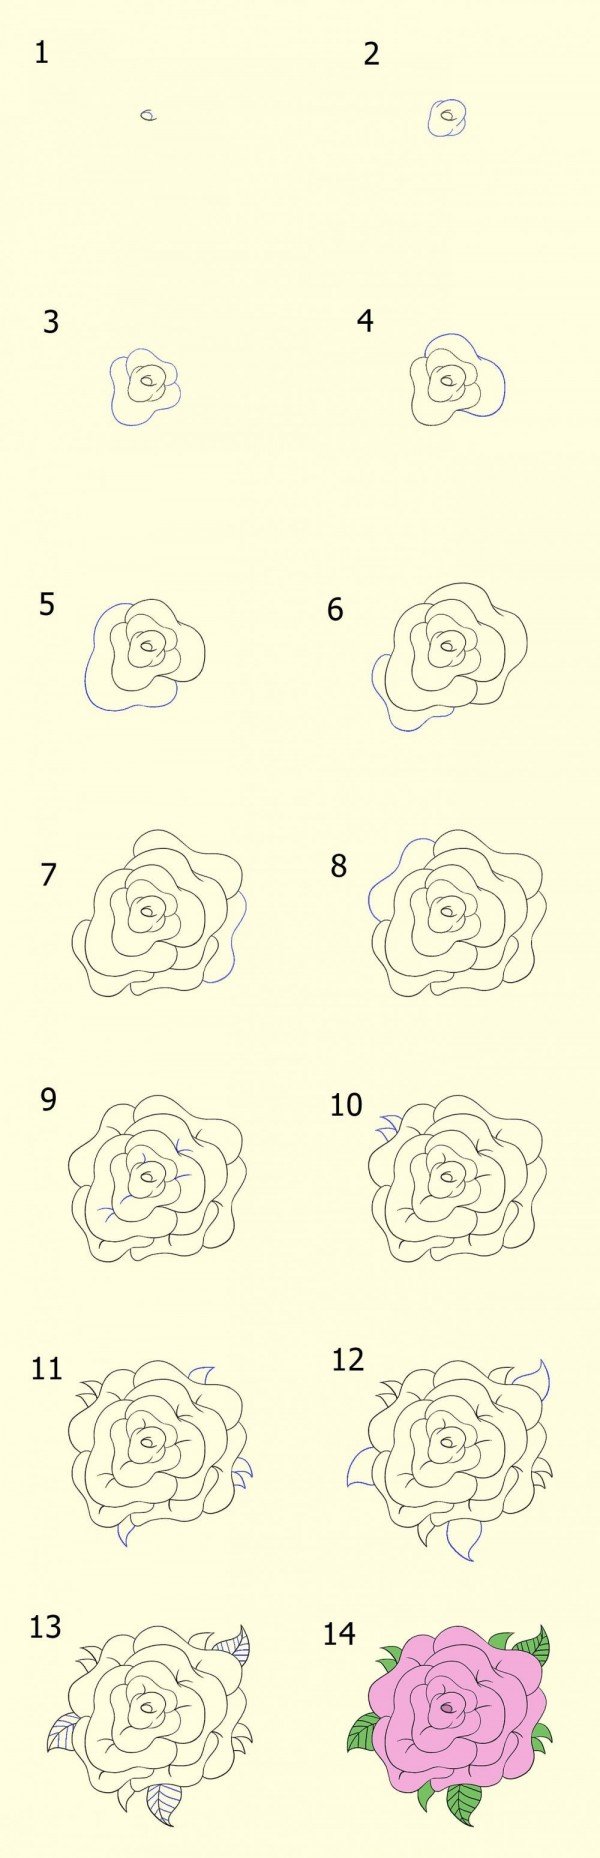 3 Cara Menggambar Sketsa Bunga Simple Dan Mudah Ditiru Kurio